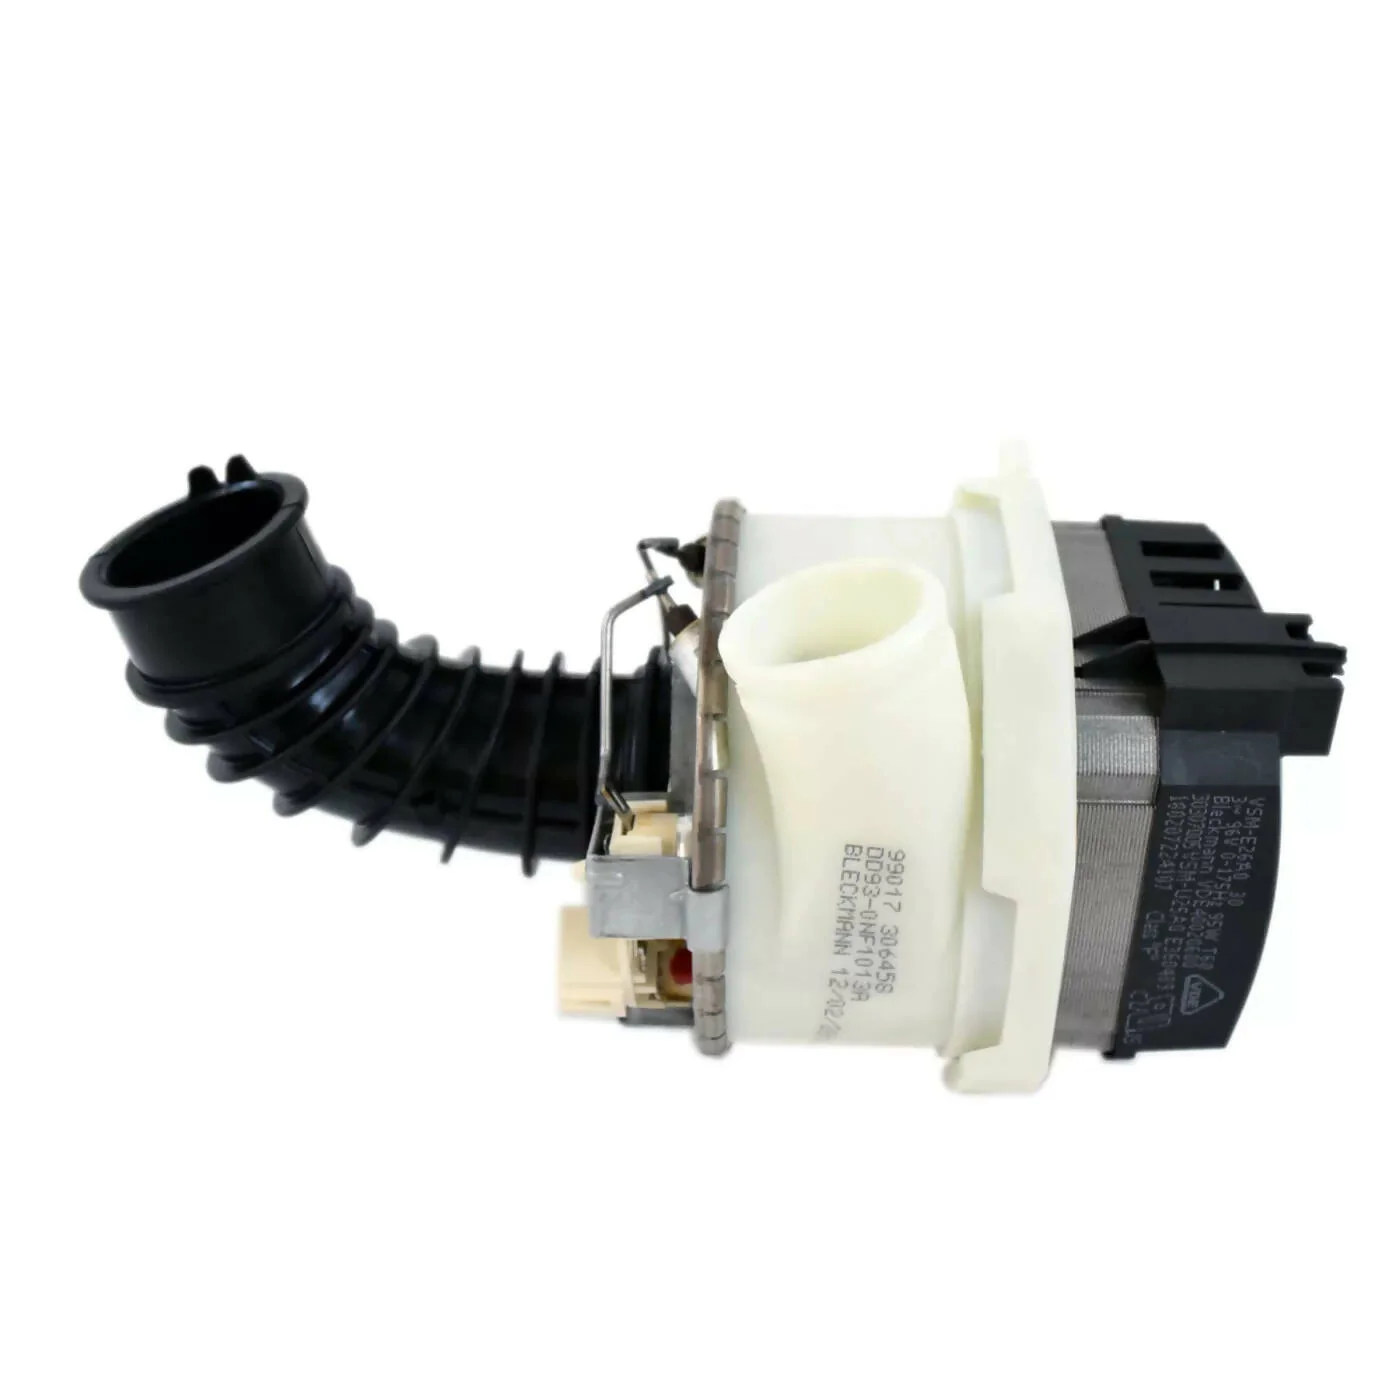 Samsung Dishwasher Circulation Pump Motor. Part #DD93-01013A